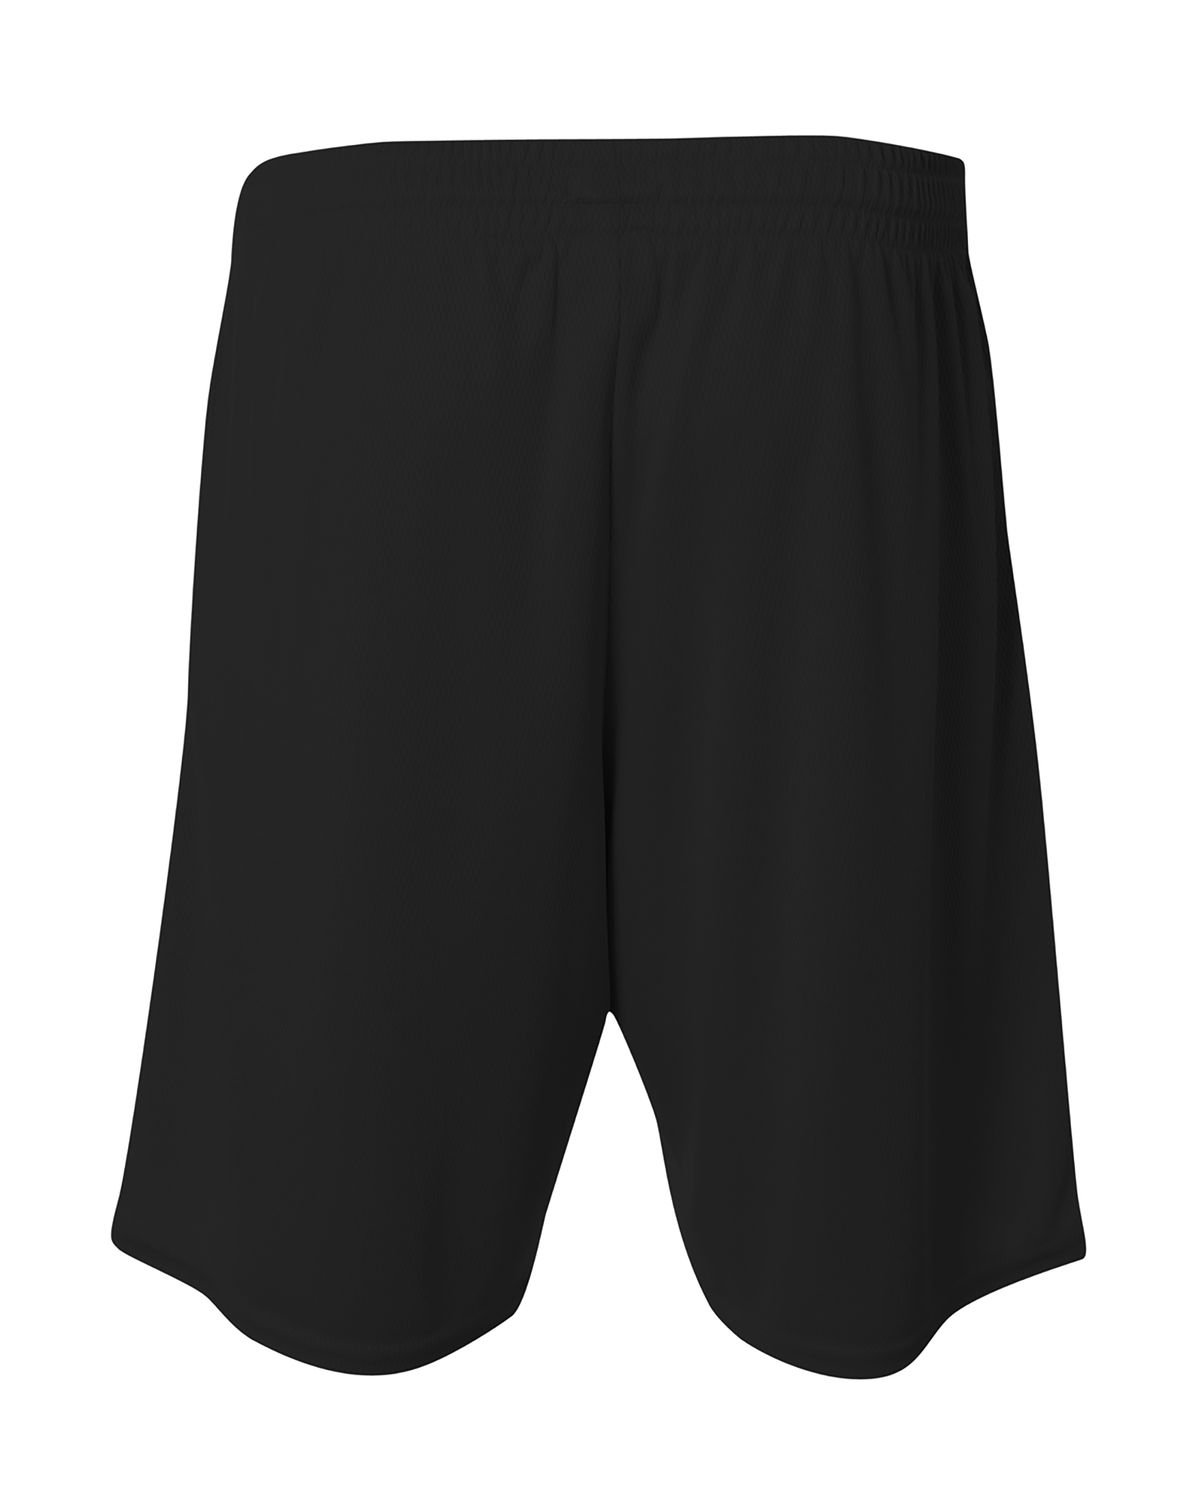 'A4 N5340 Men's Flat Back Mesh Shorts w/ Contrast Stitching'